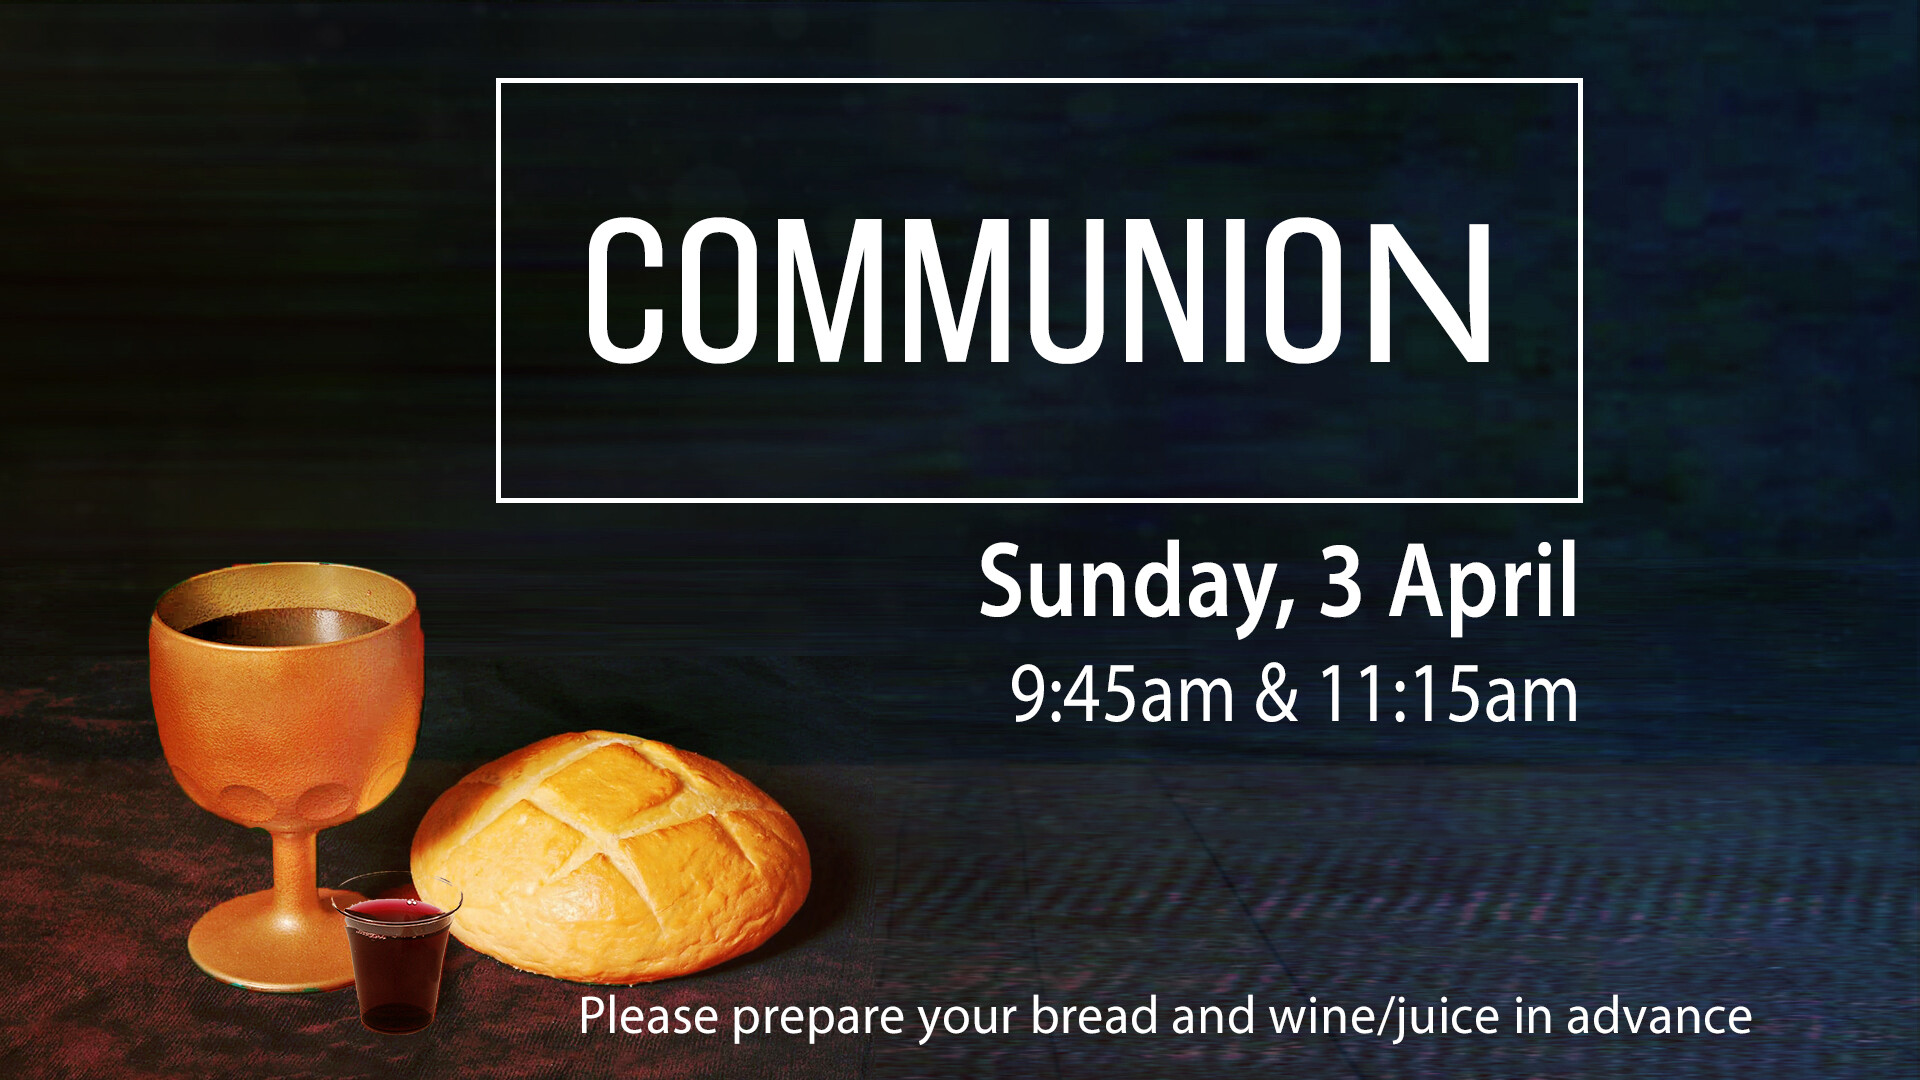 Communion this Sunday 3 April